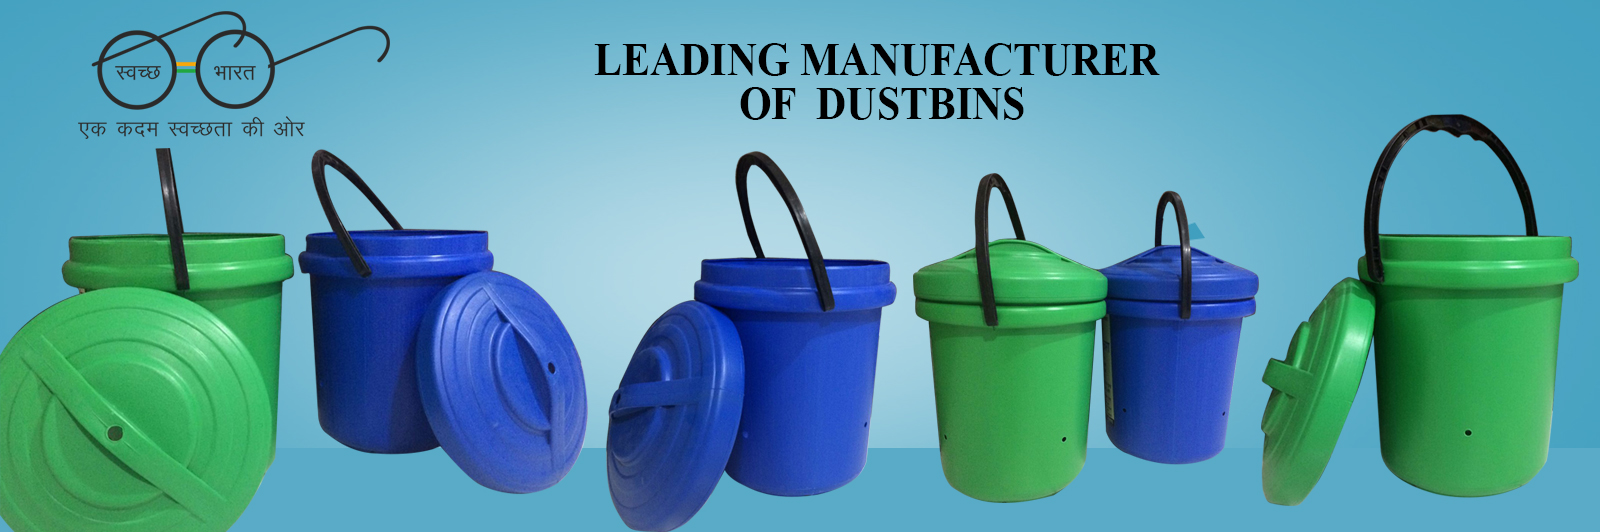 plastic dustbin manufacturers in india